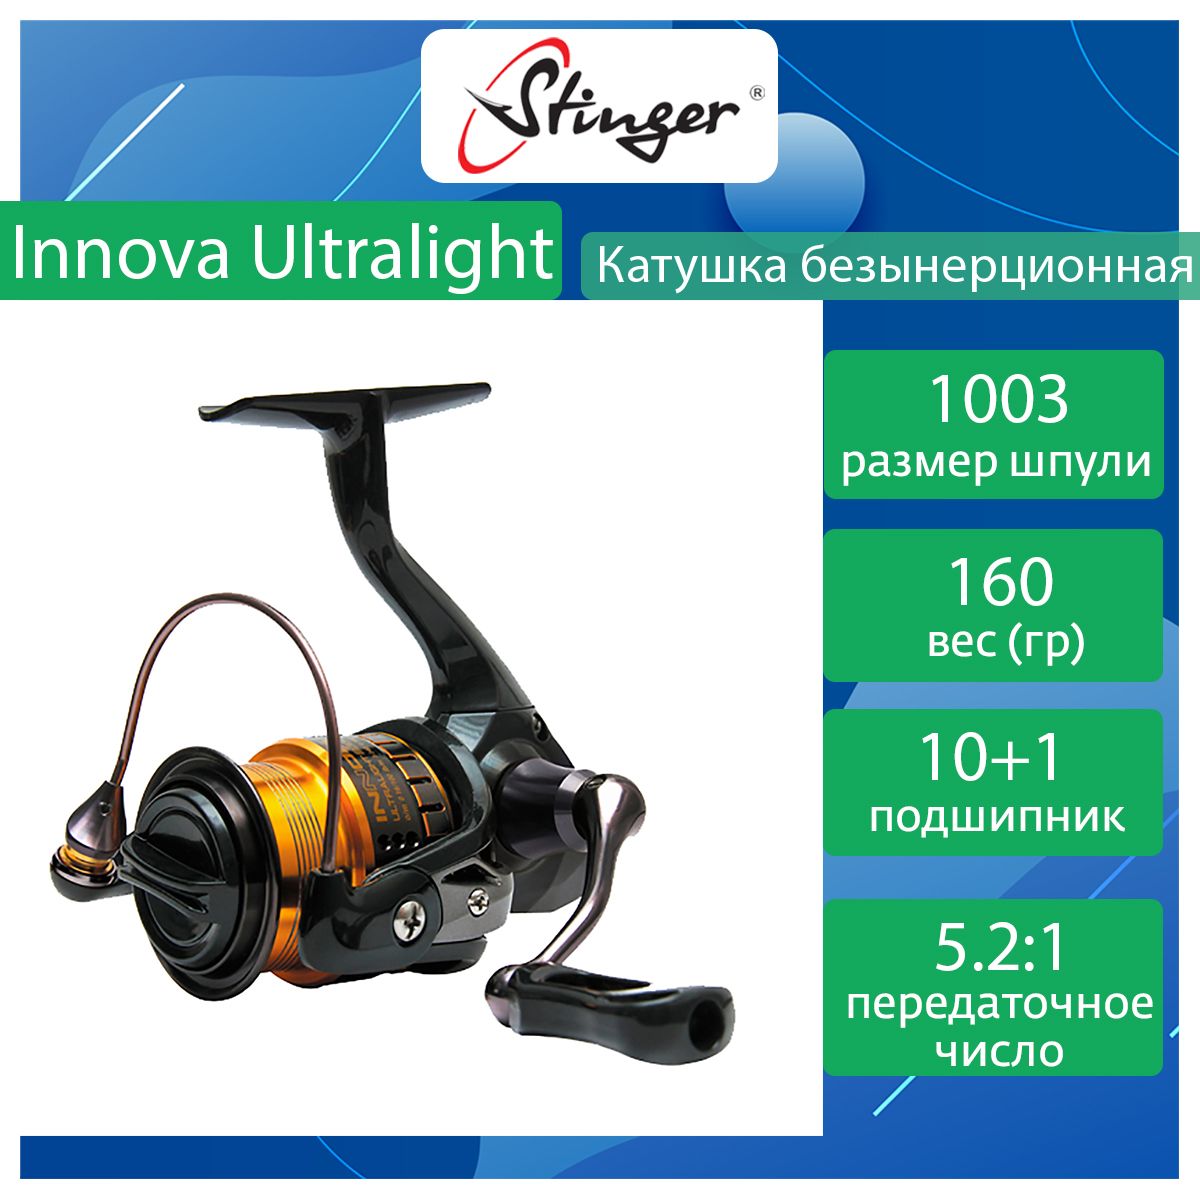 Катушка для рыбалки безынерционная Stinger Innova Ultralight ef49019